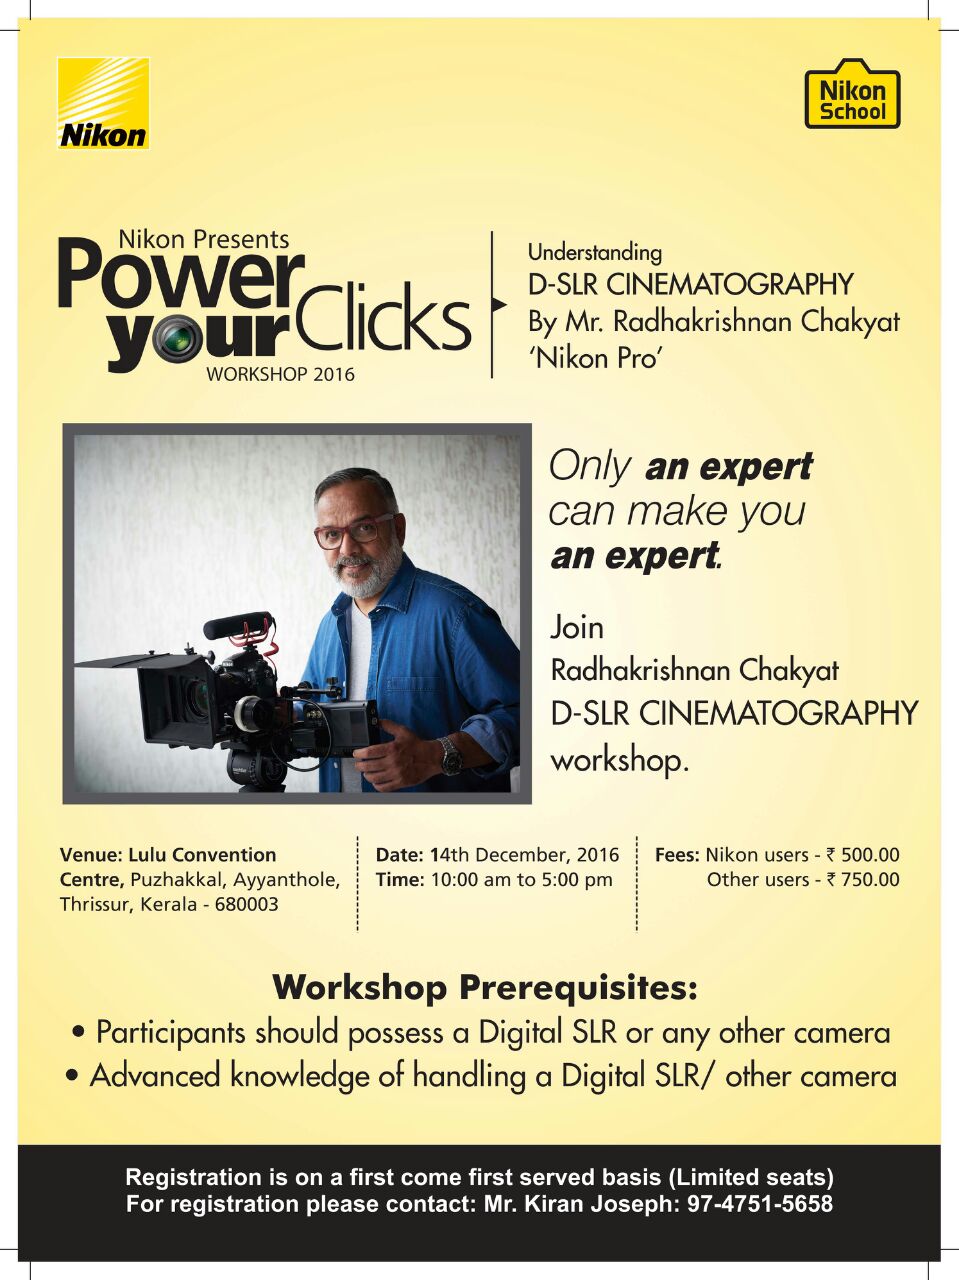 Nikon presents Power your clicks workshop 2016